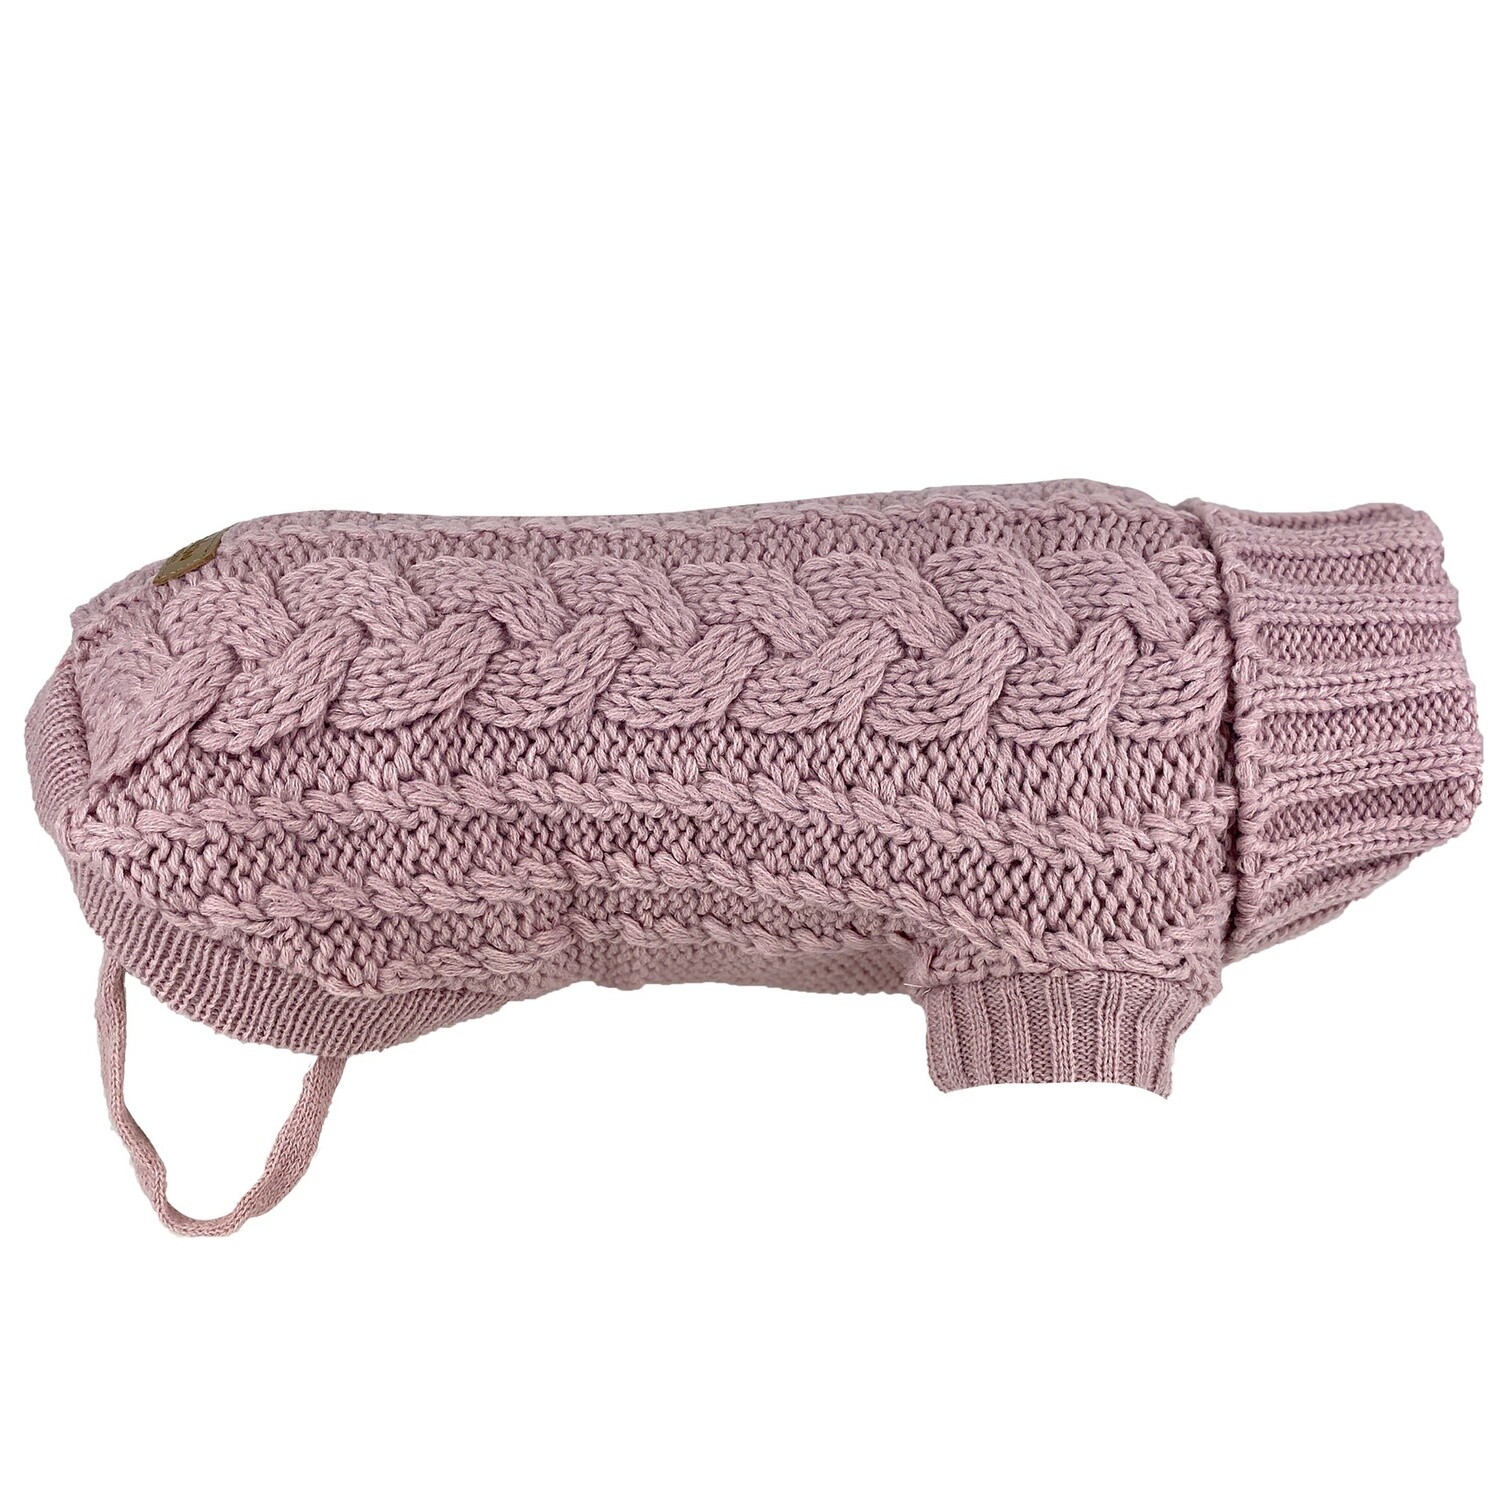 Huskimo French Knit Jumper - Rose Pink, Size: 52.5cm